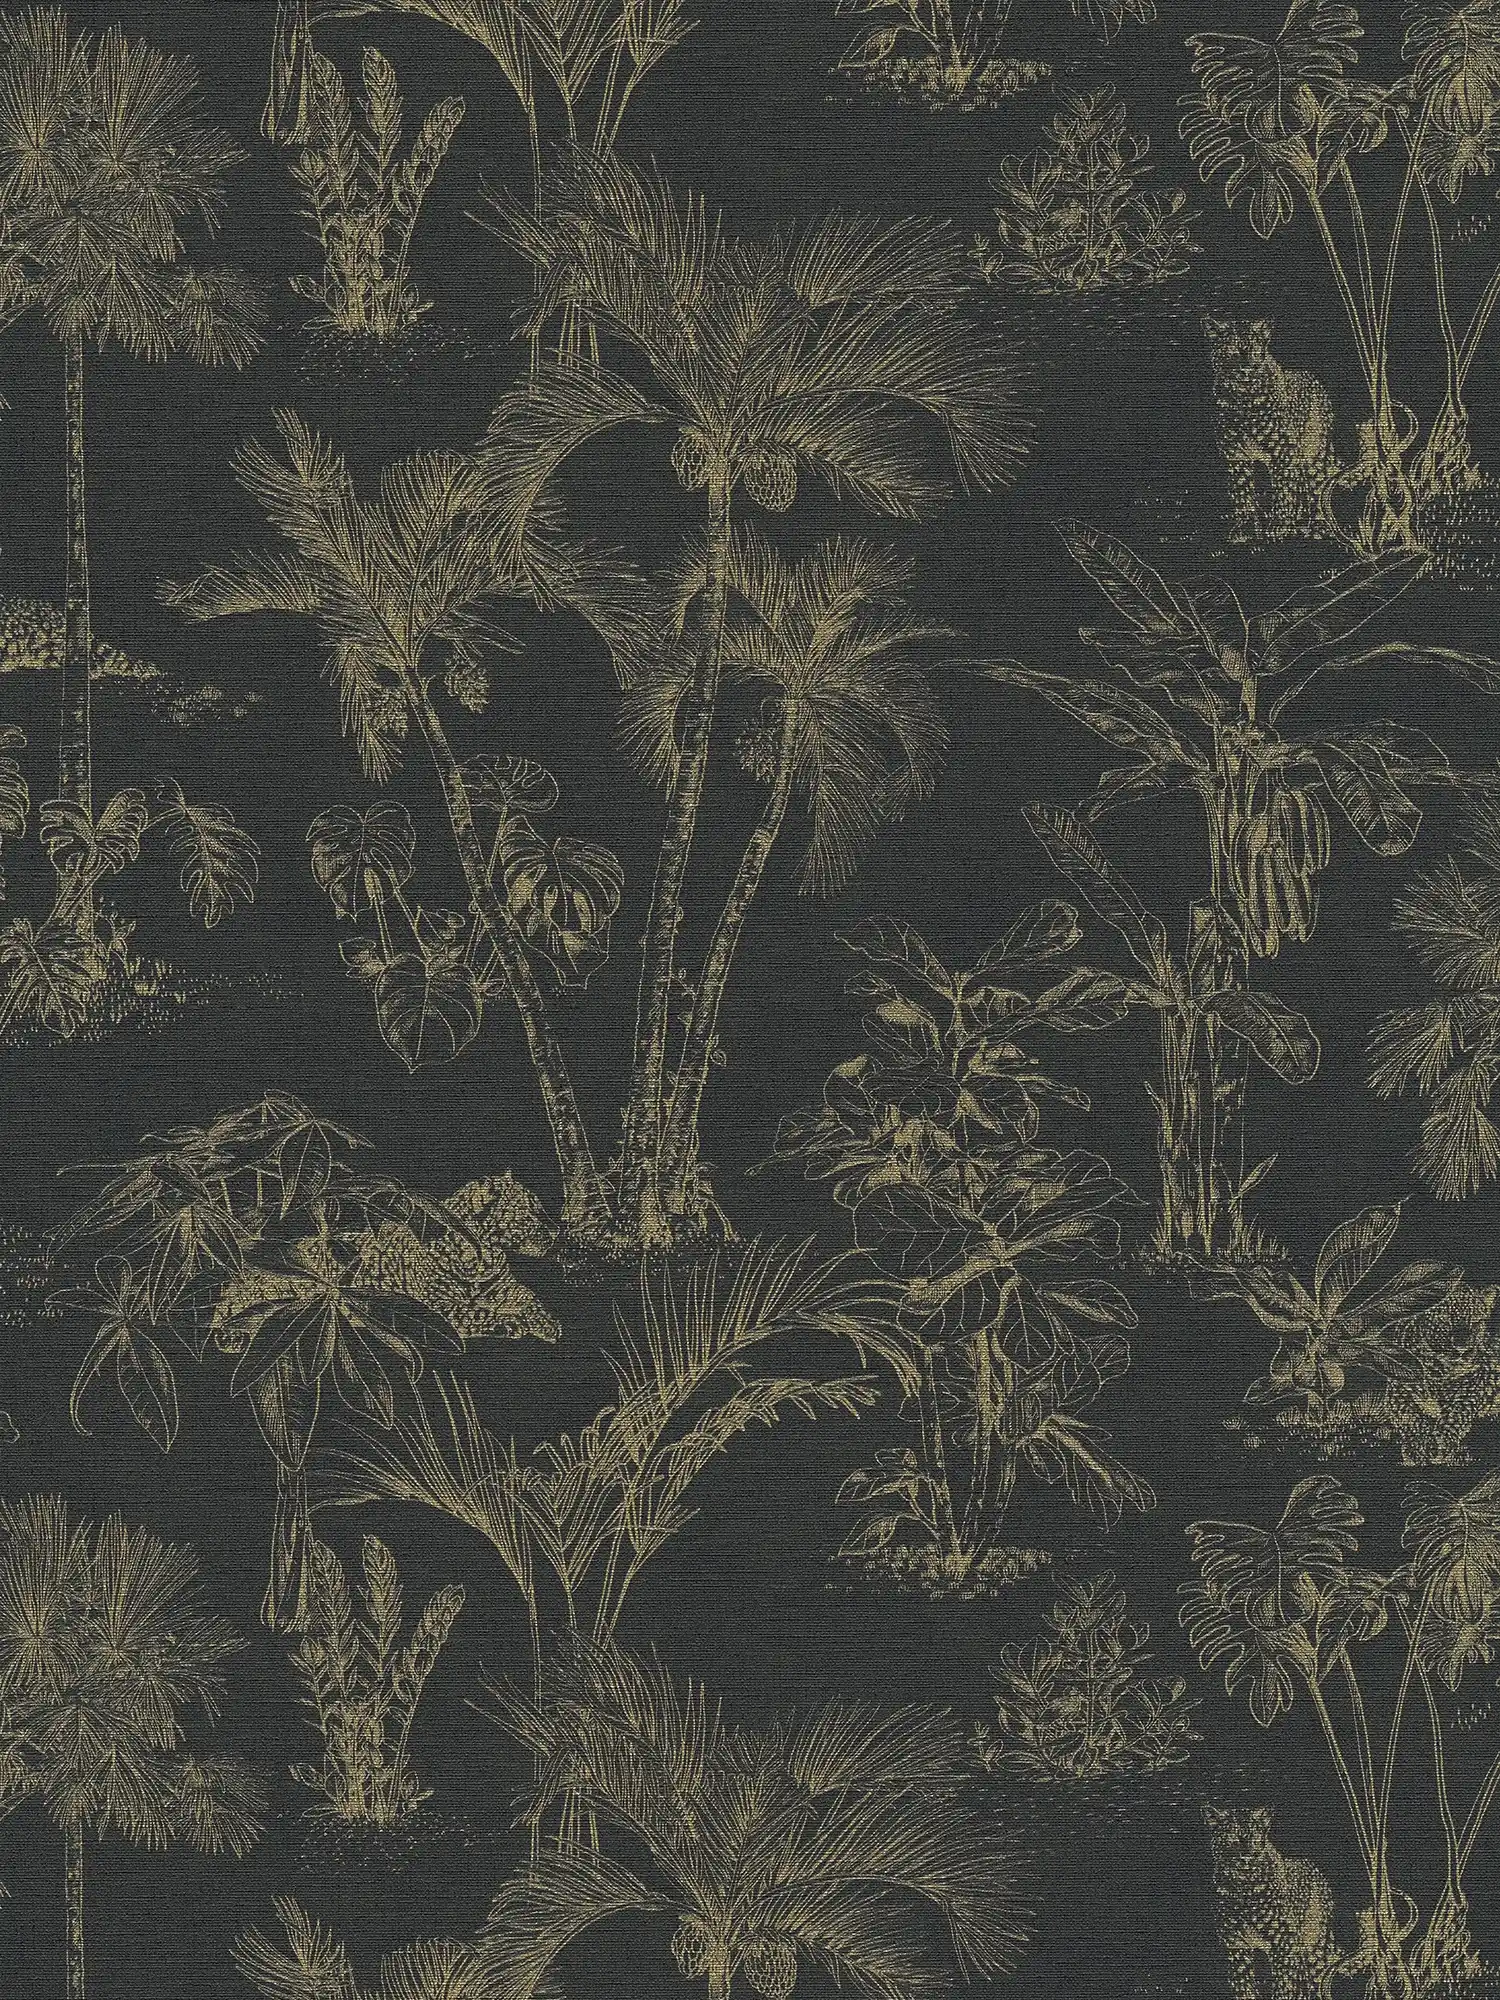         Wallpaper jungle with gold pattern - metallic, black
    